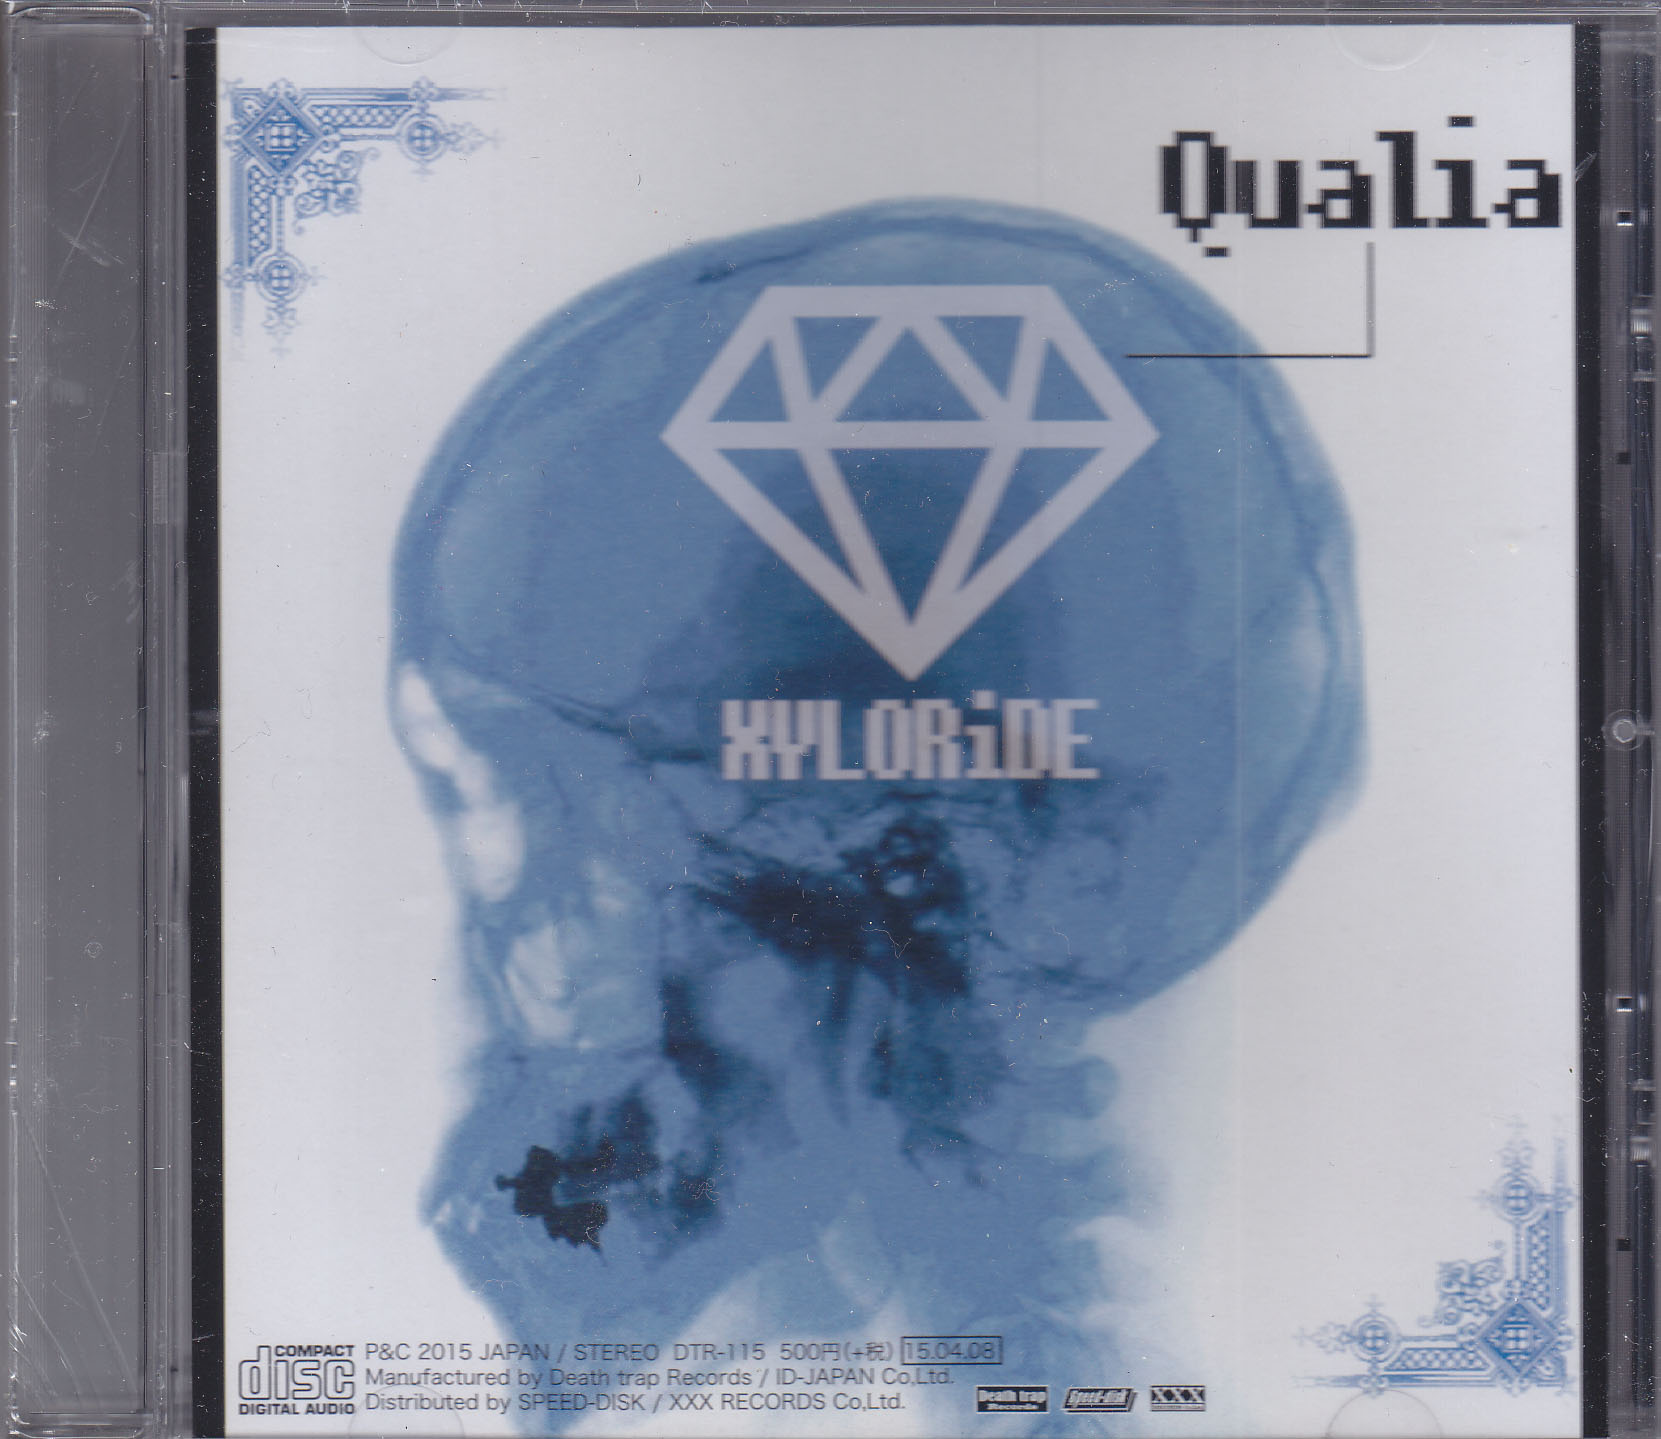 XYLORiDE ( ザイロライド )  の CD Qualia